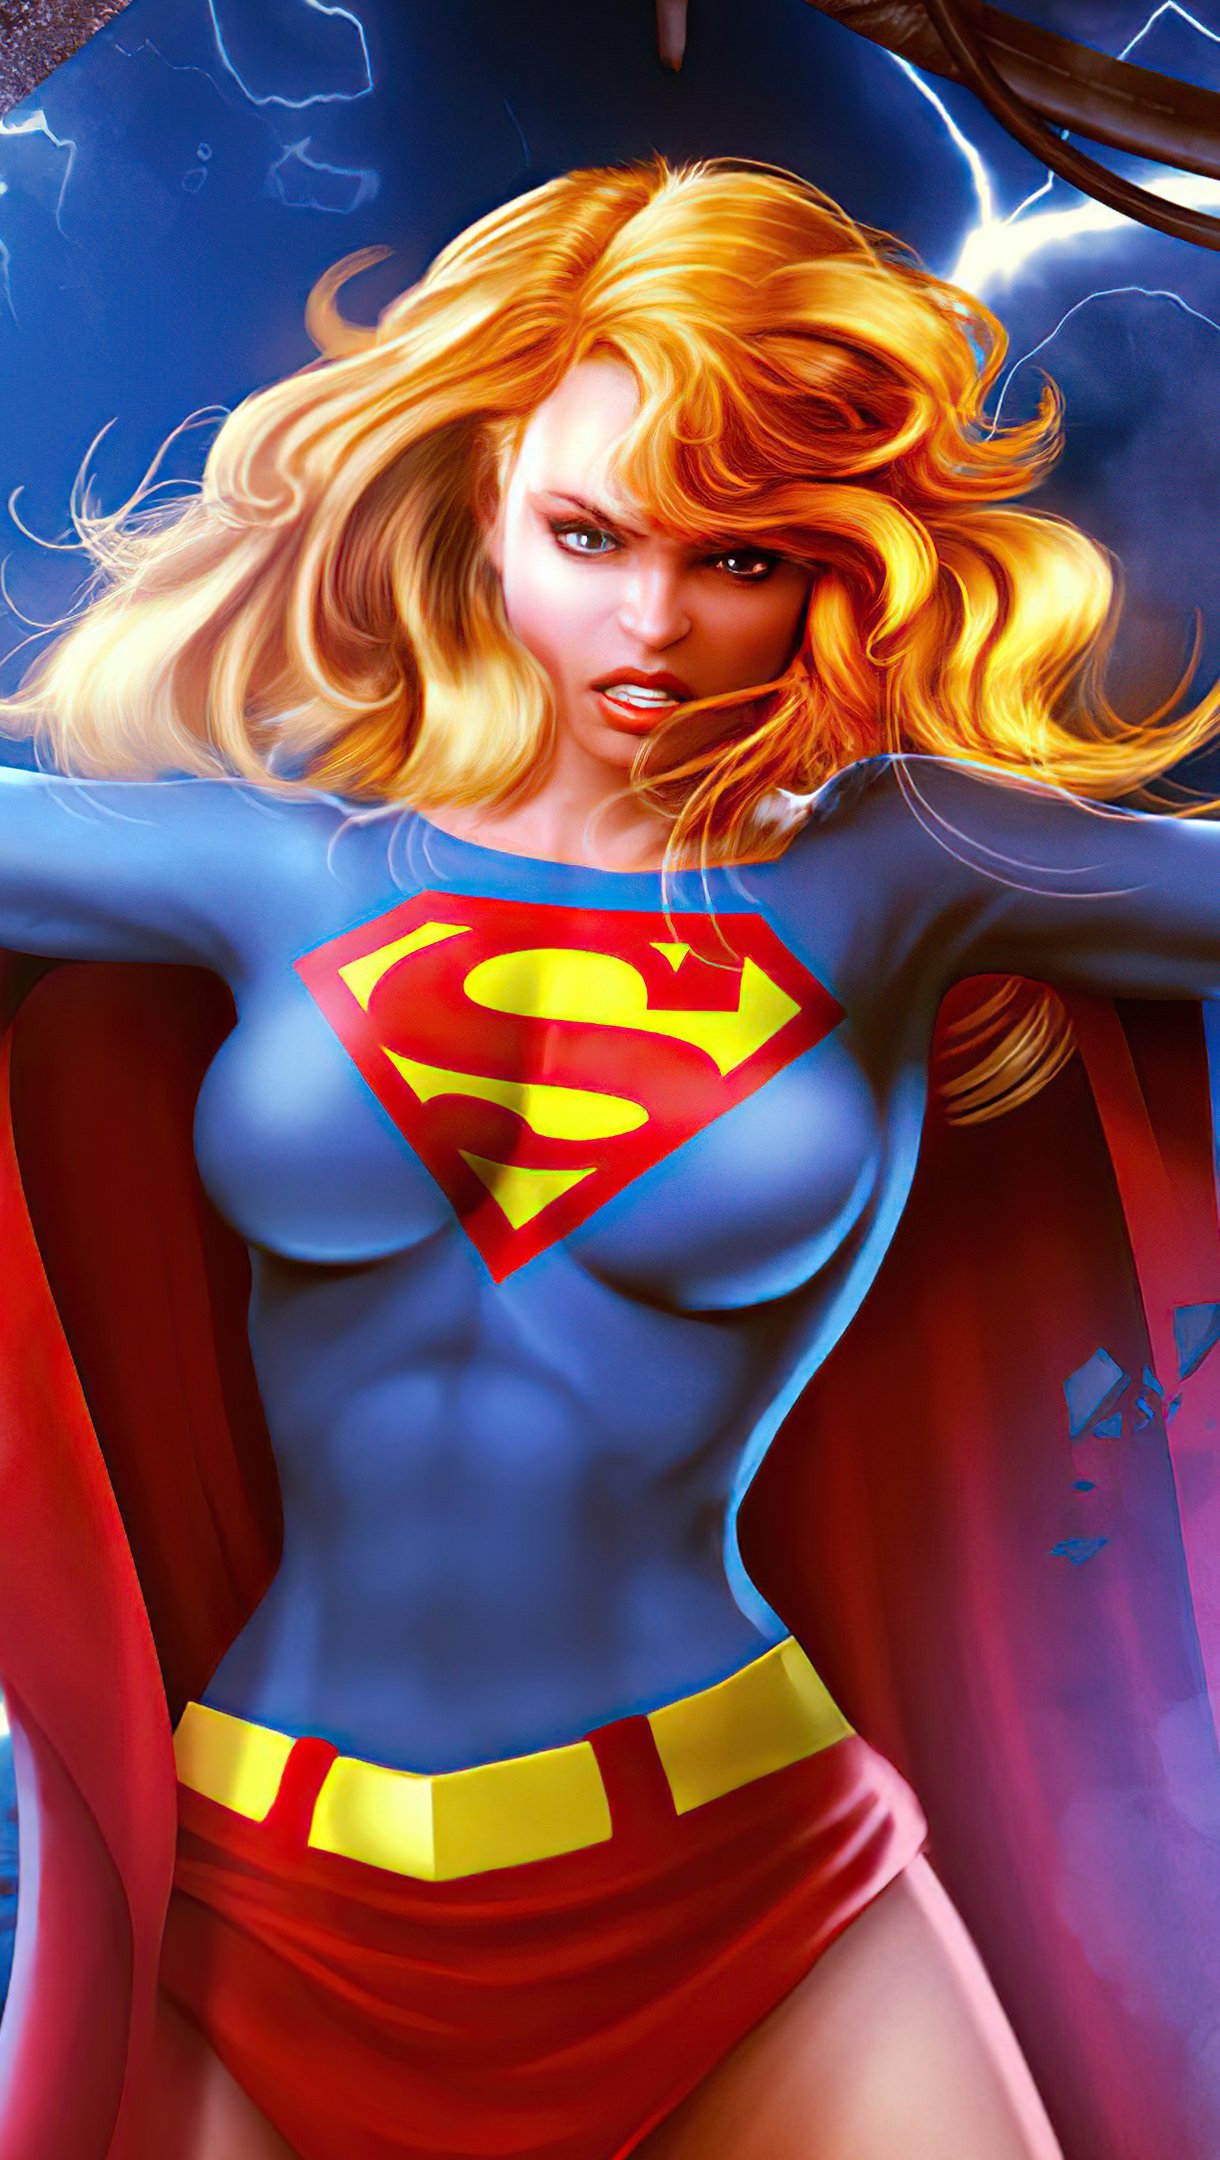 Supergirl Superhero Fanart Wallpaper 4k Ultra HD ID:7654